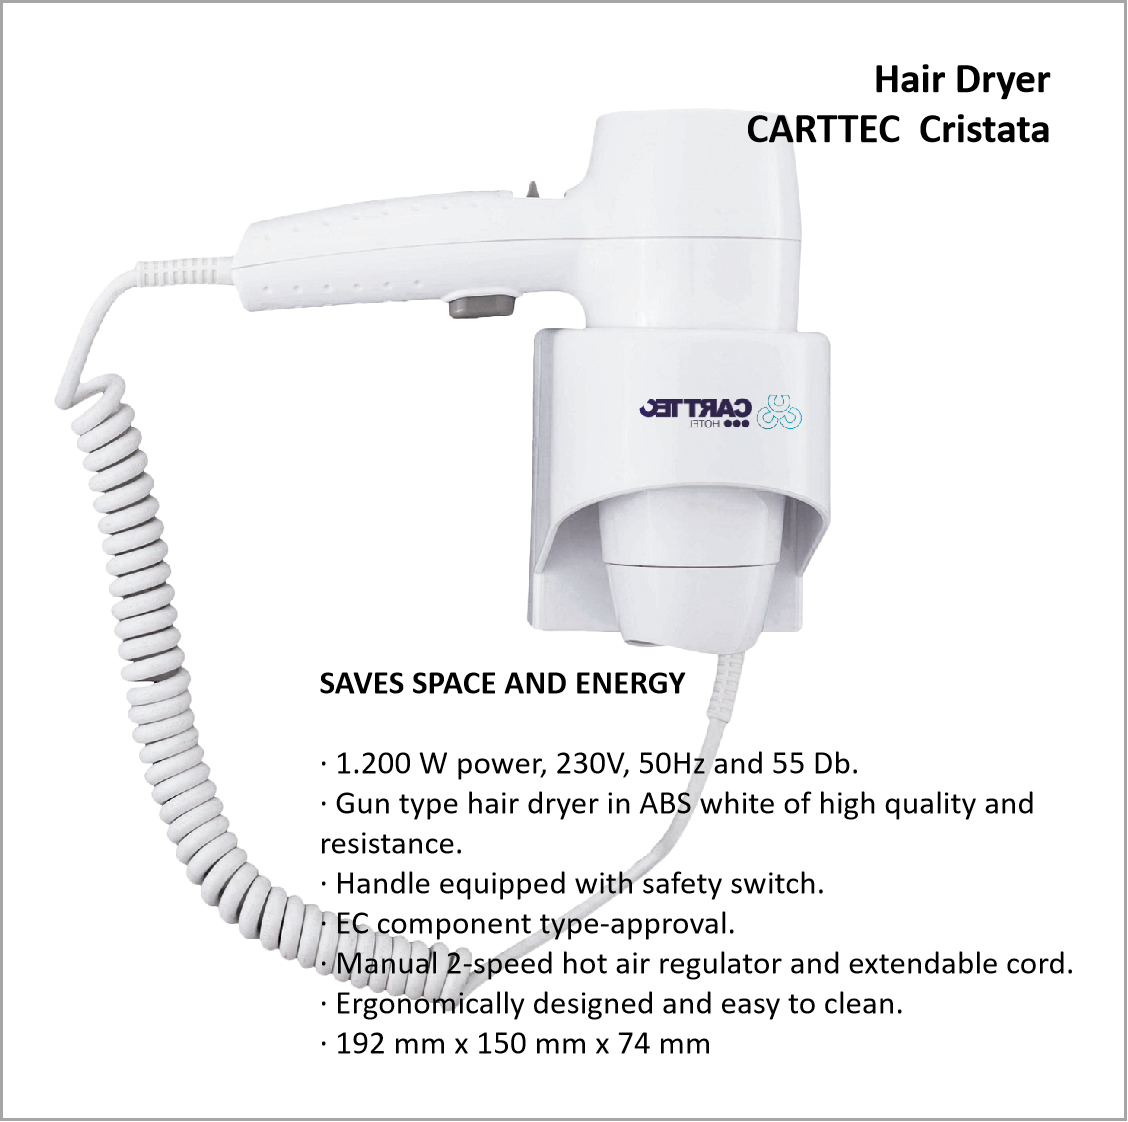 Debaf - CARTTEC Cristata Hair Dryer